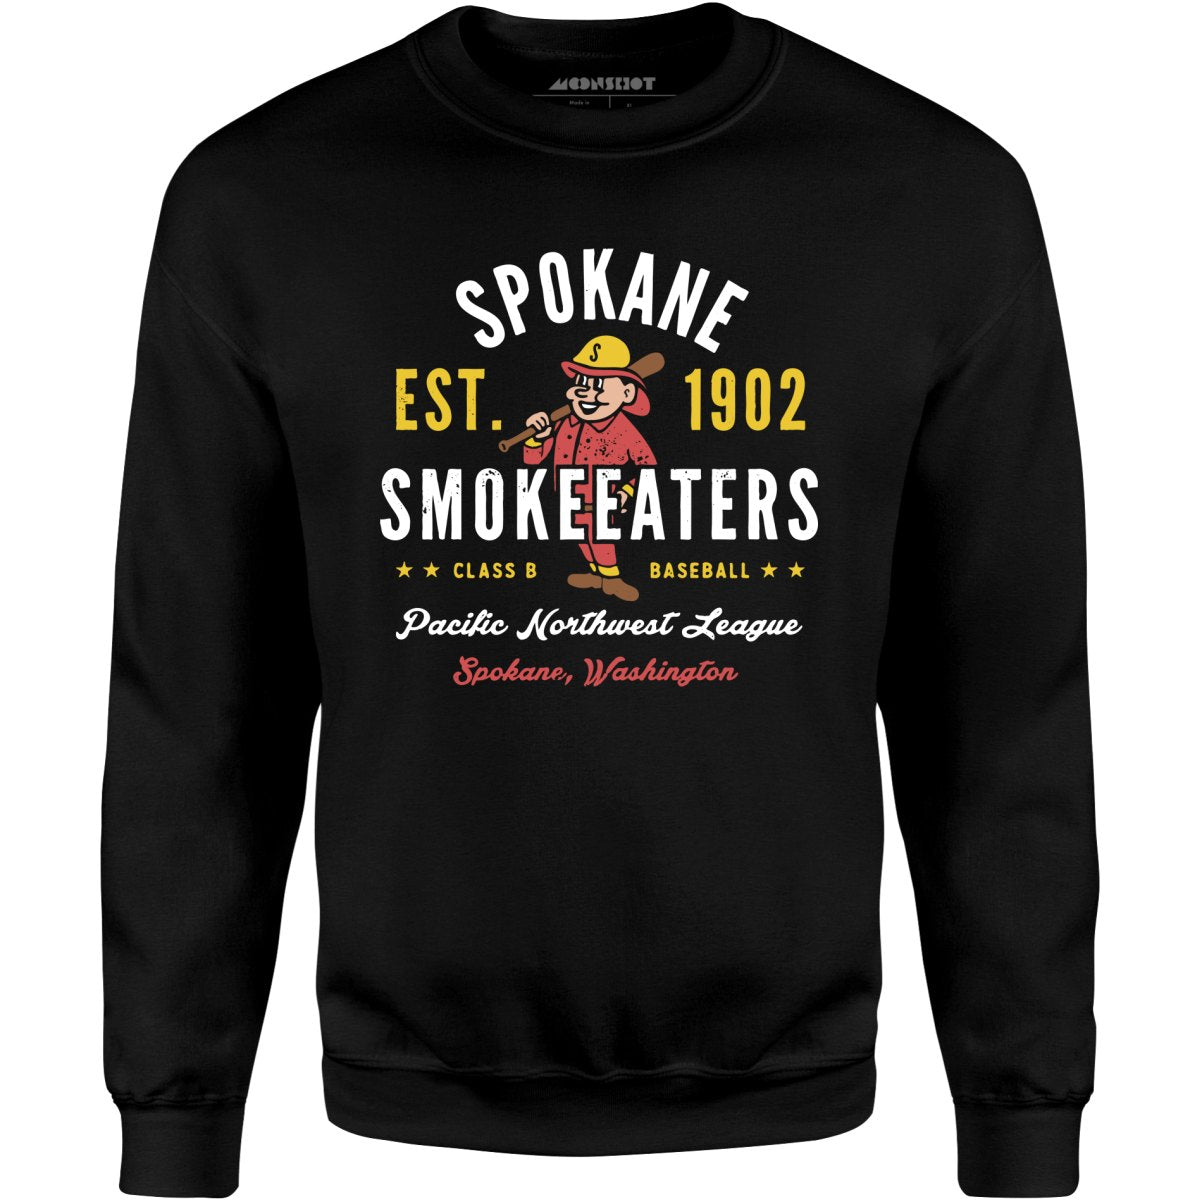 Spokane Smoke Eaters - Washington - Vintage Defunct Baseball Teams - Unisex Sweatshirt